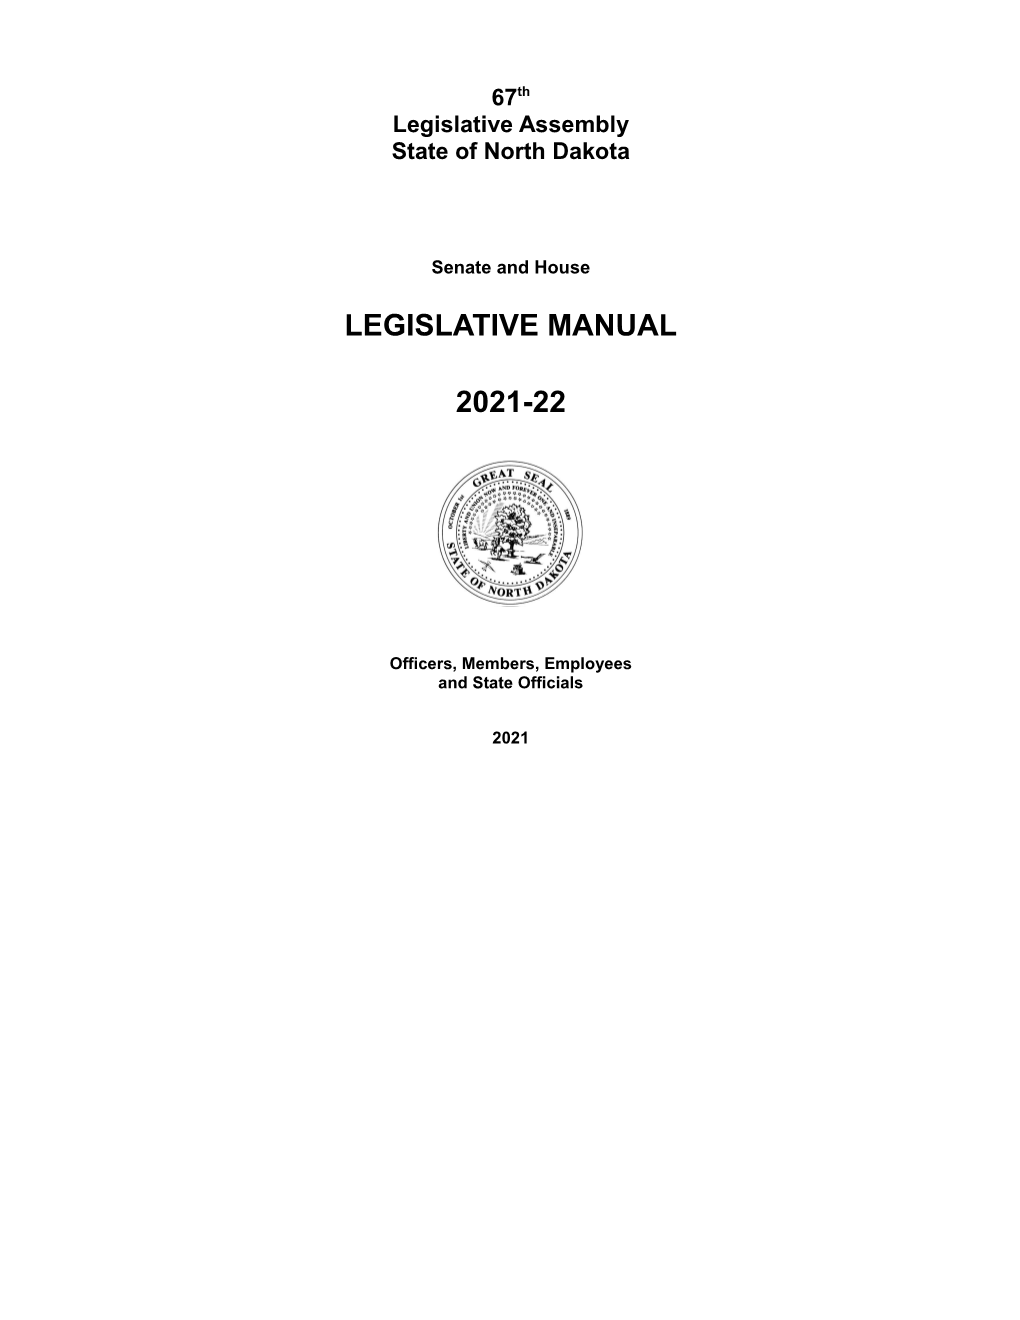 Legislative Manual 2021-22